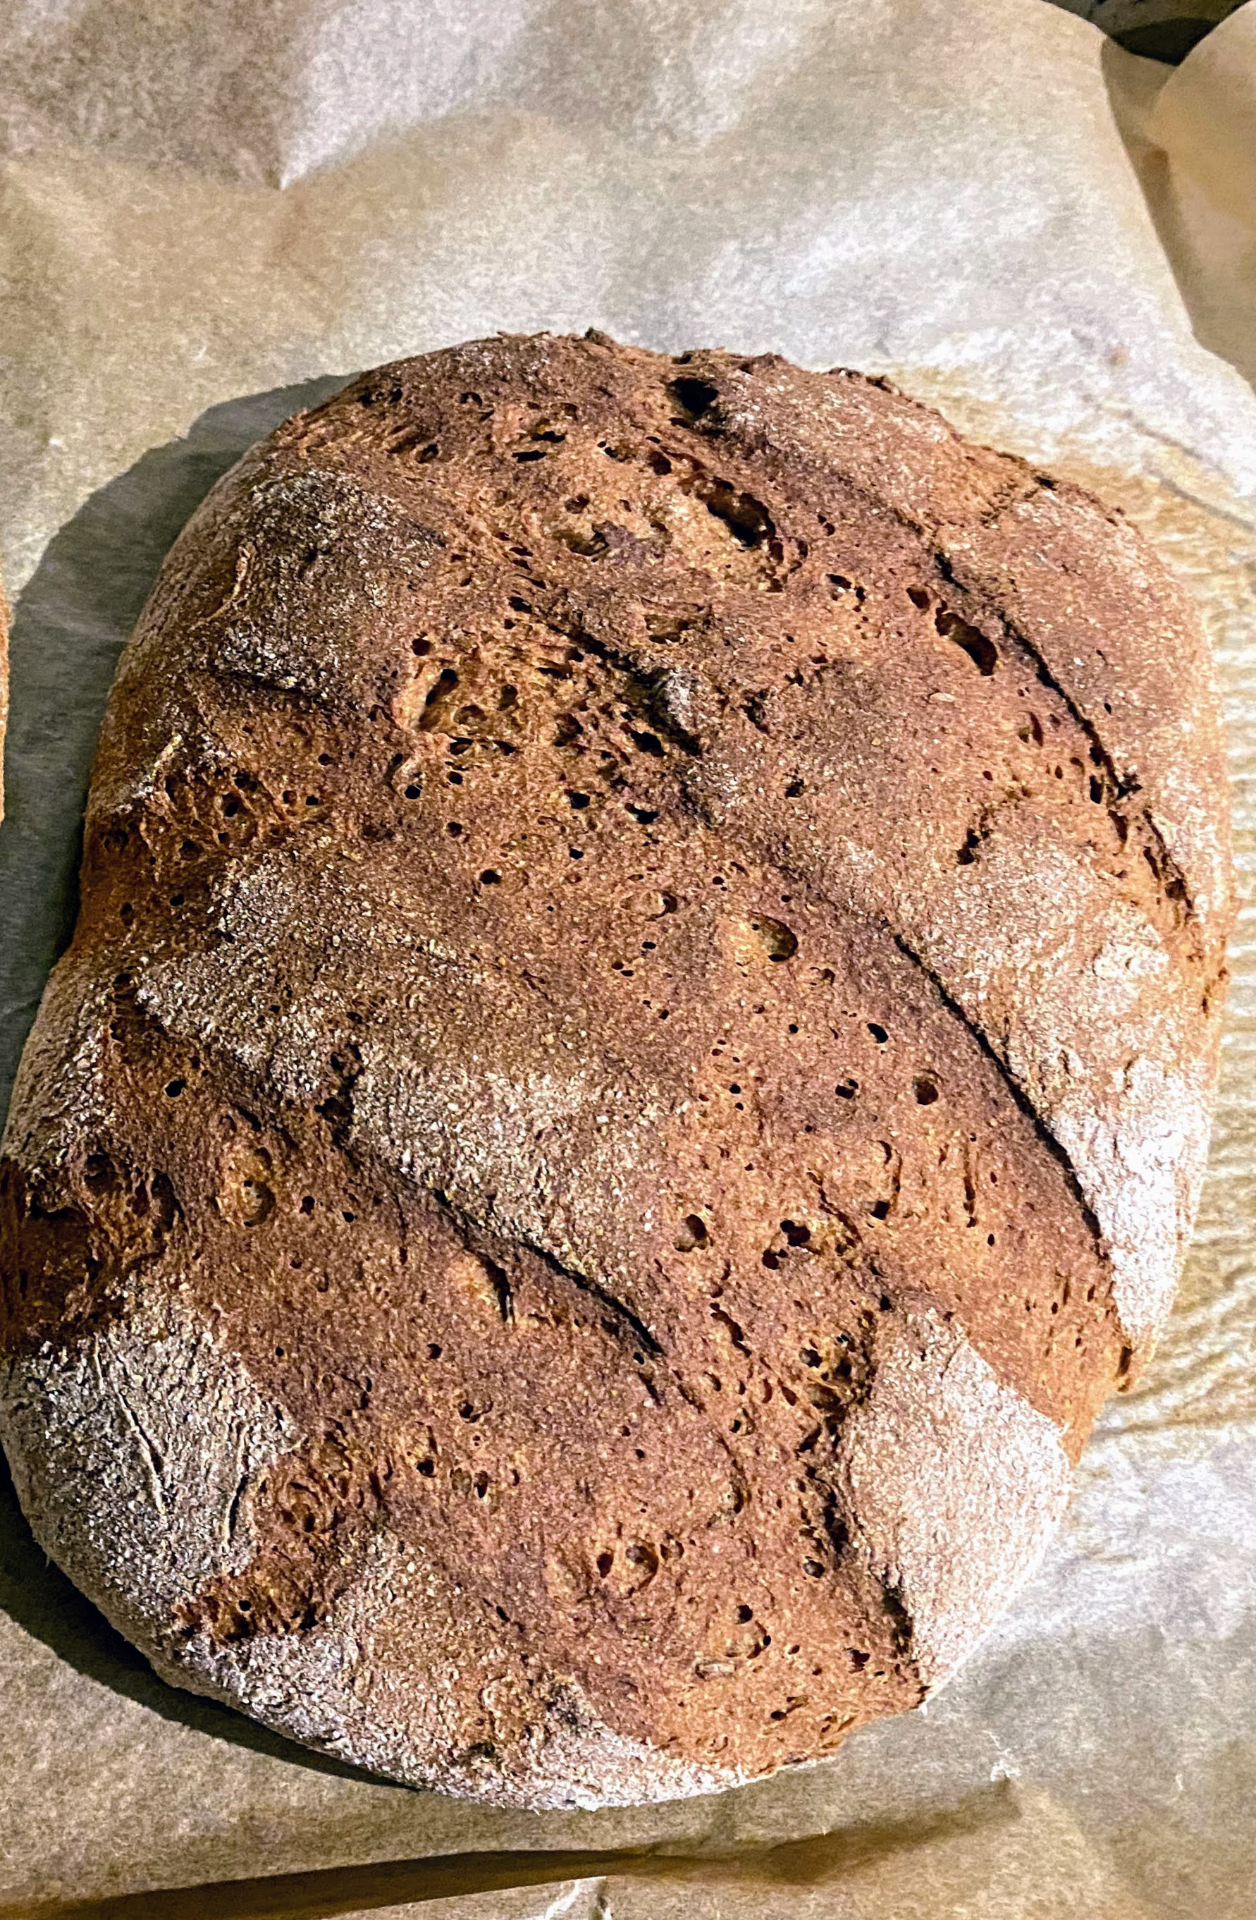 #7 Paul Hollywood's dark rye bread - My Wayfaring Life